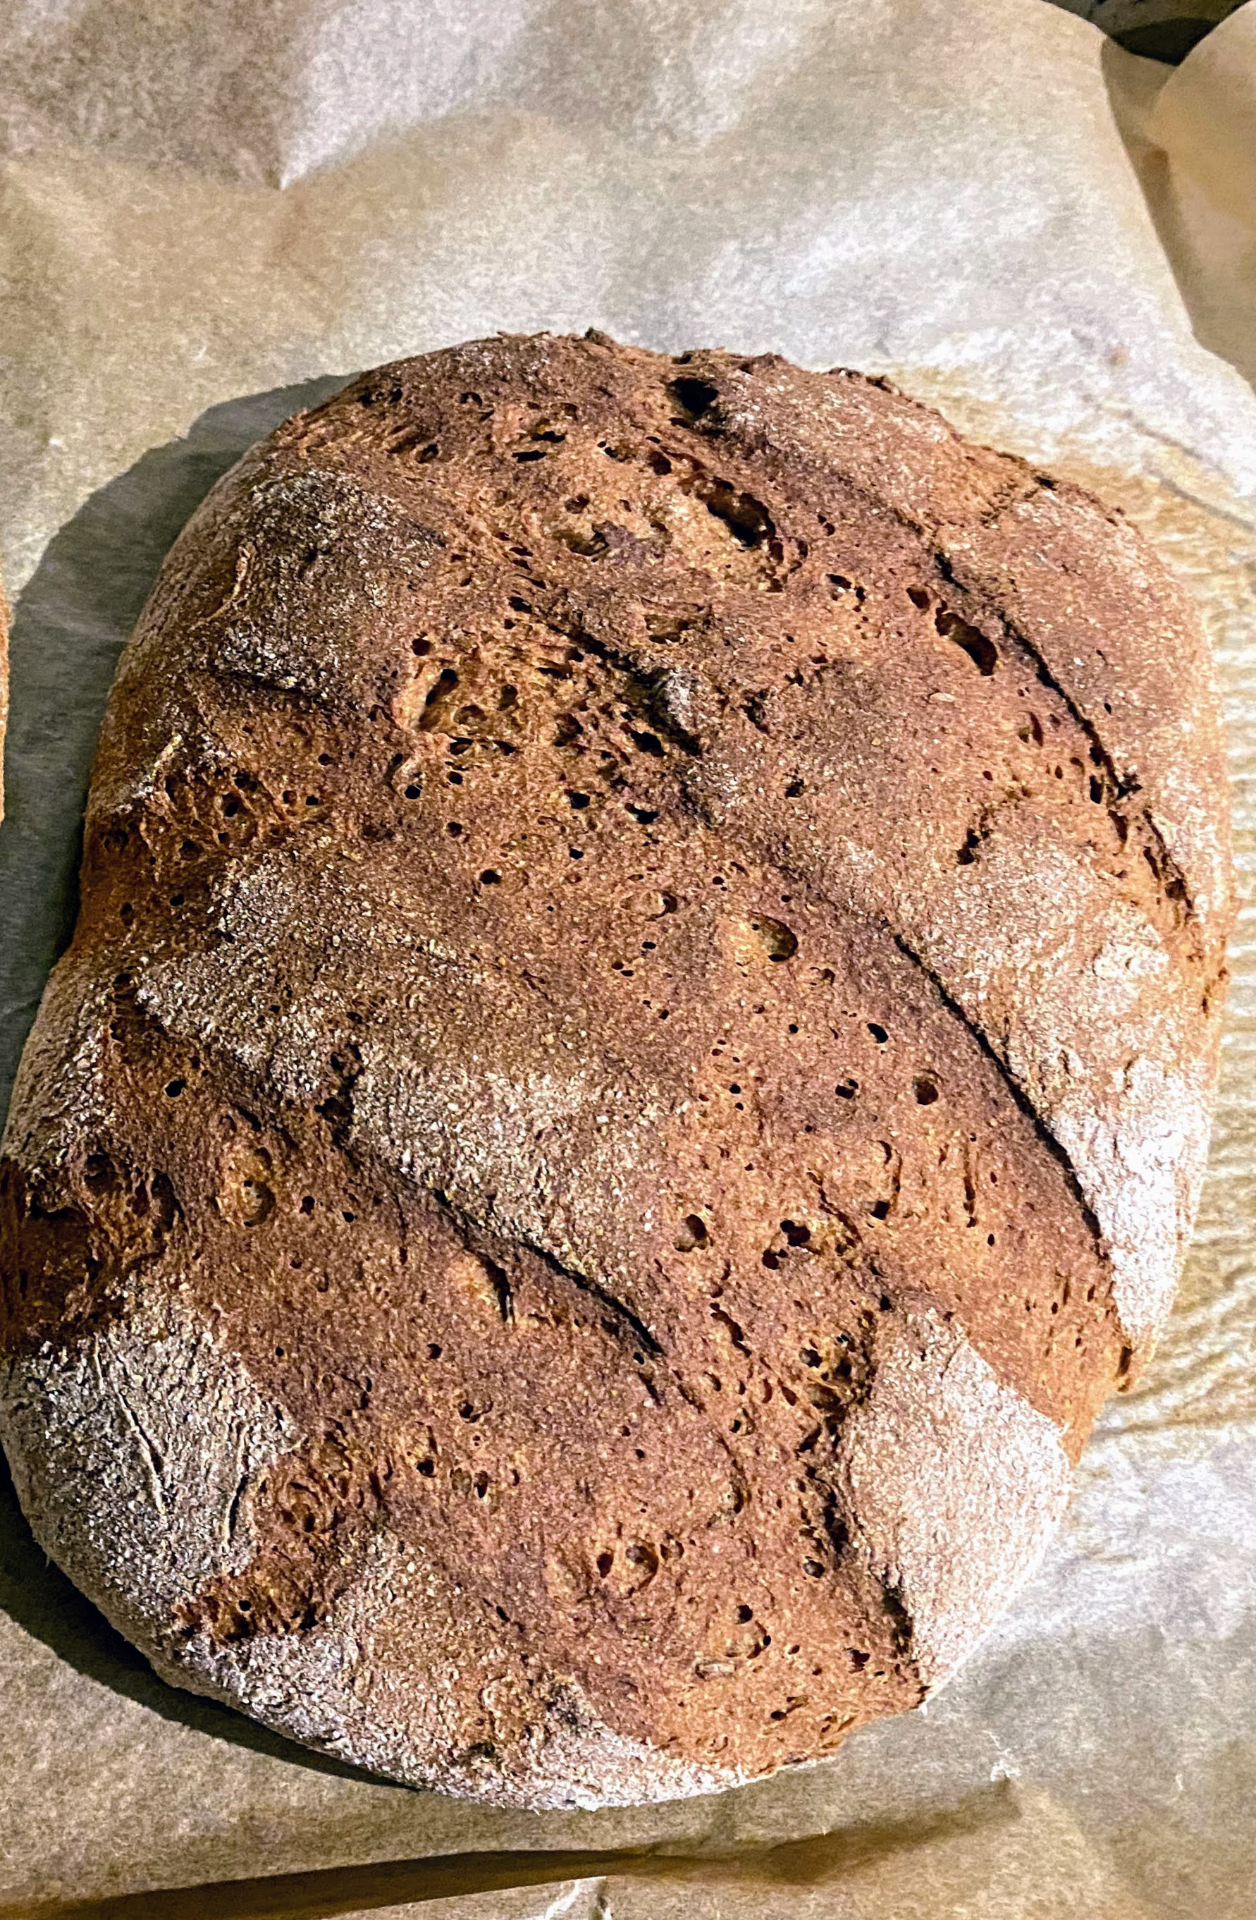 #7 Paul Hollywood's dark rye bread - My Wayfaring Life